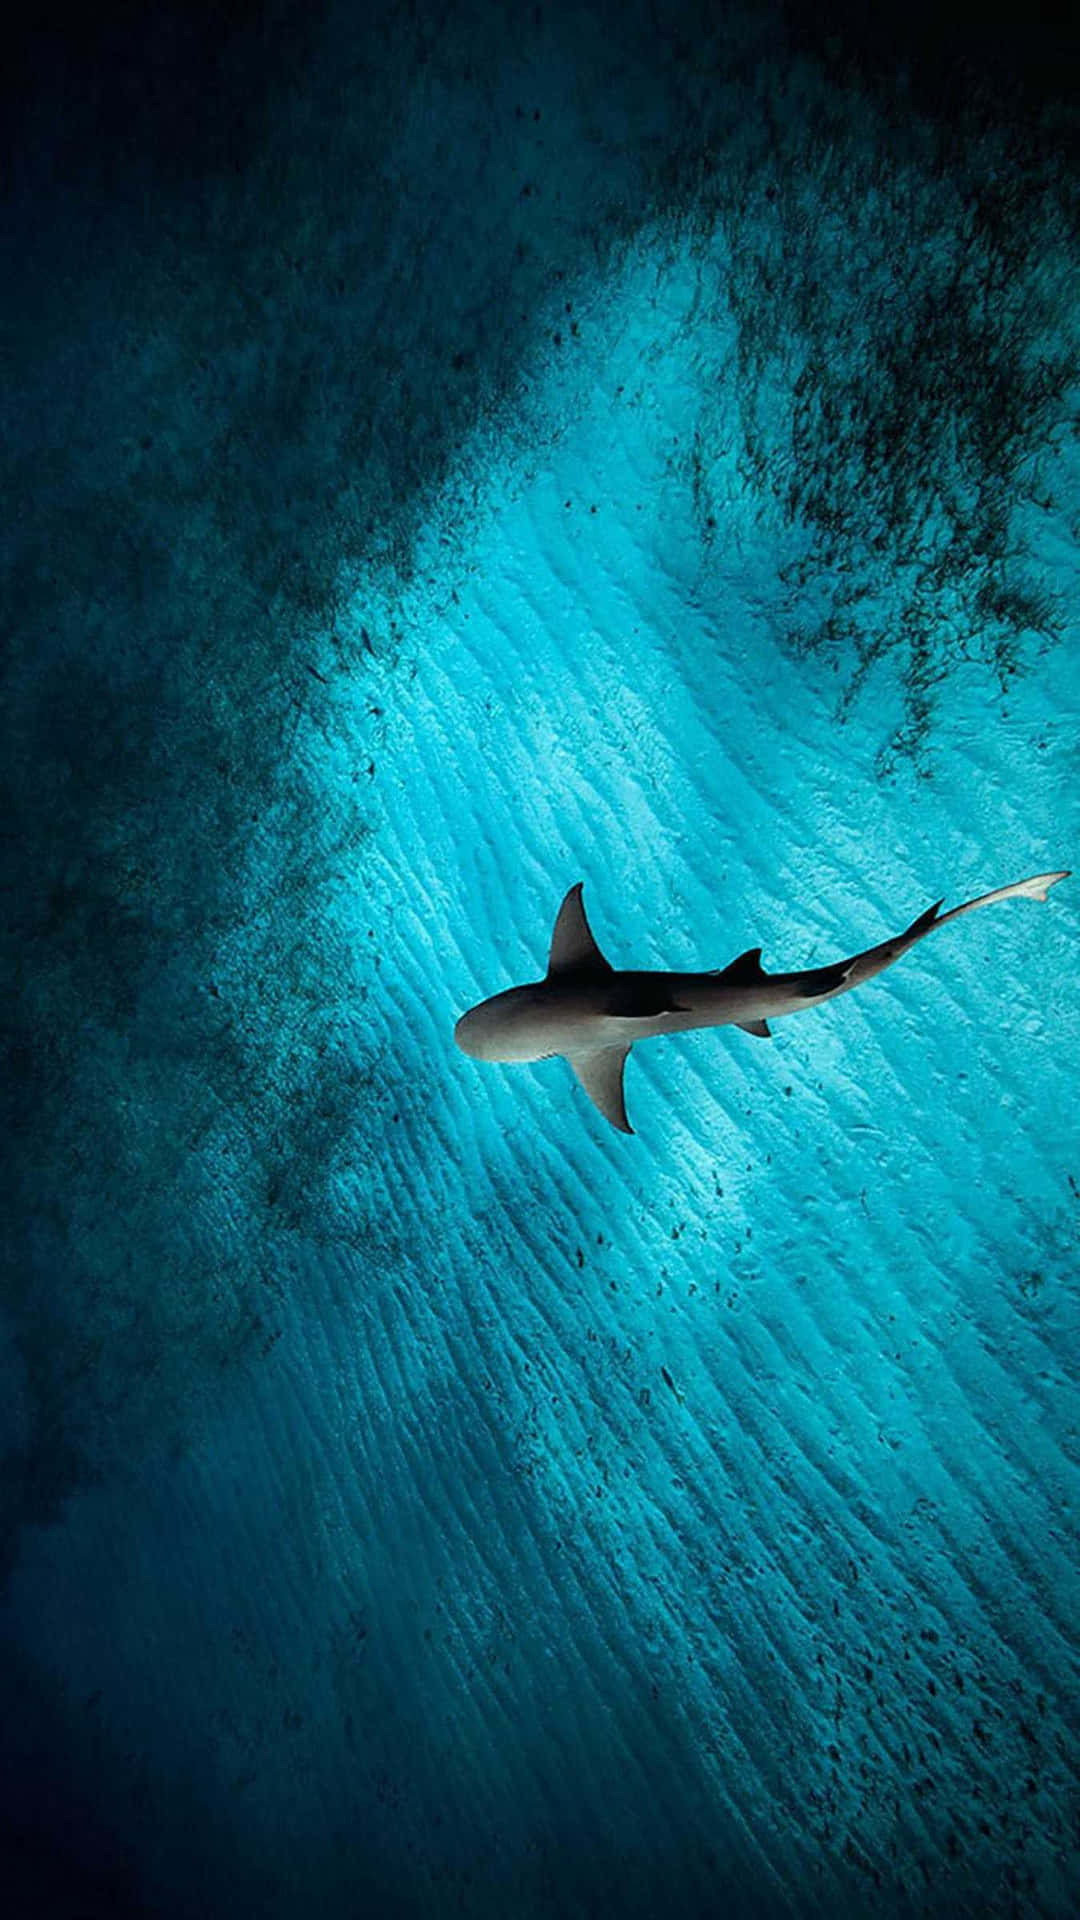 Scary Shark Lurking Beneath the Water Wallpaper